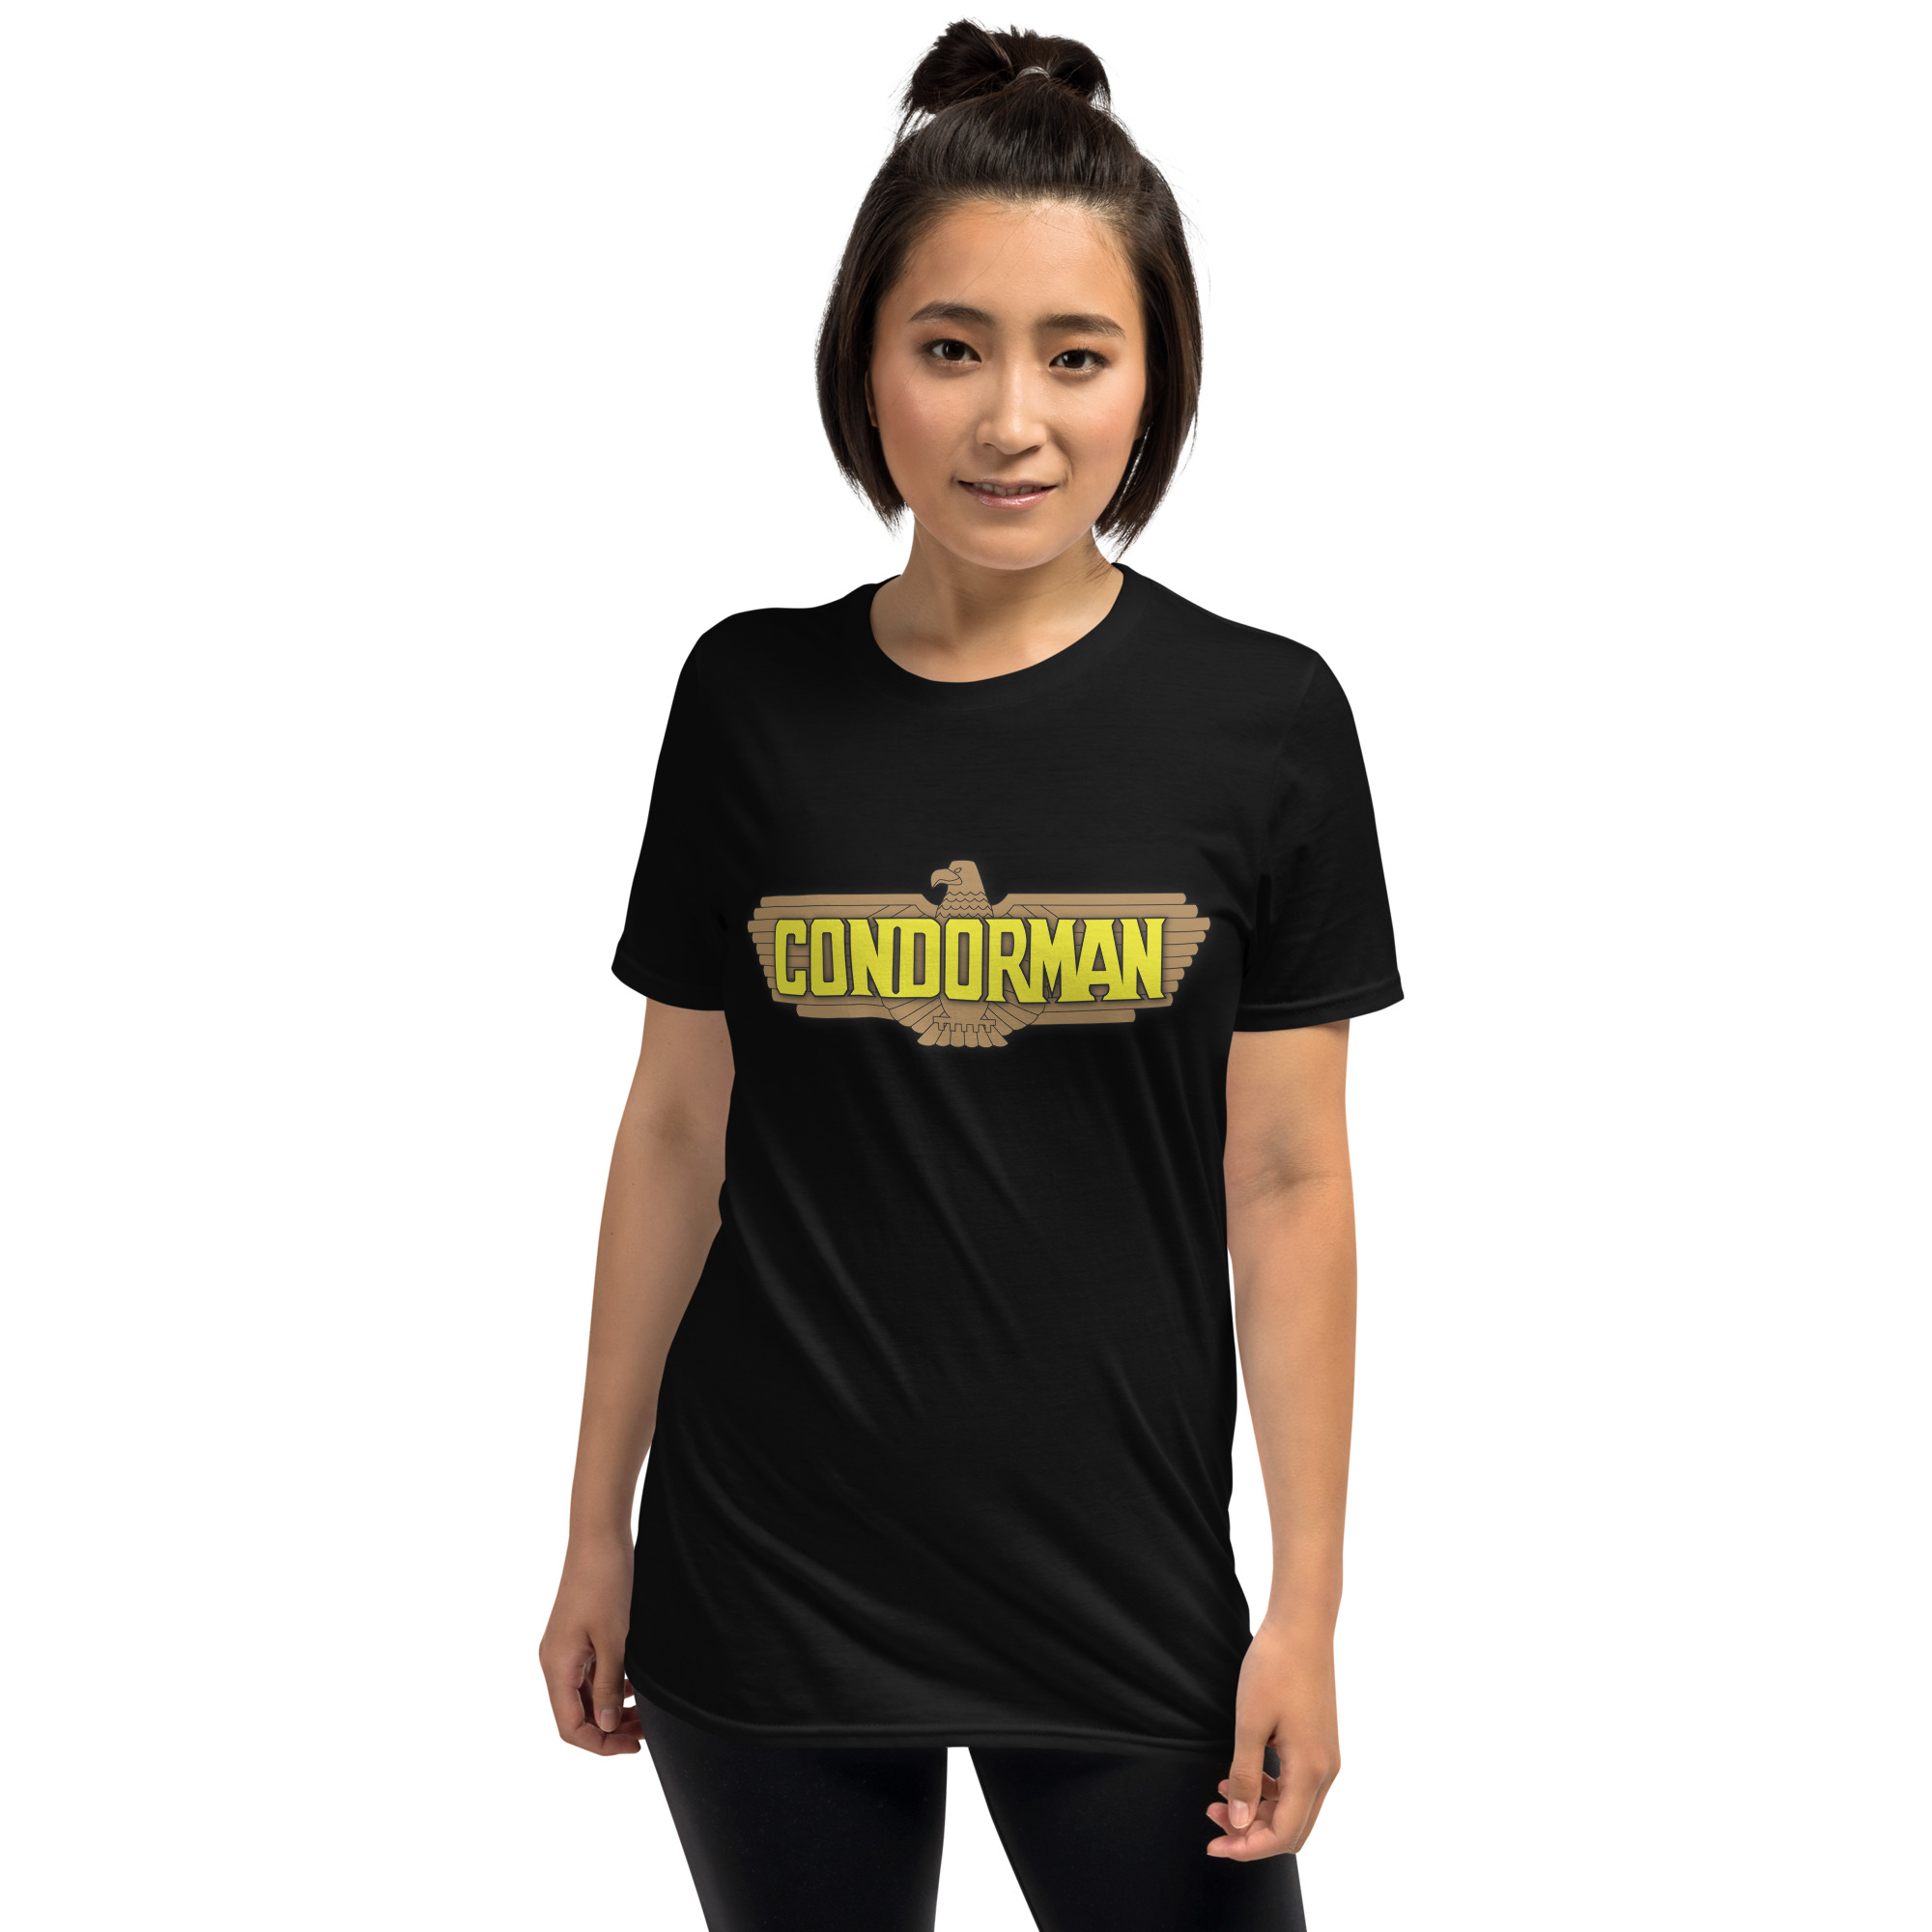 Condorman (Short-Sleeve Unisex T-Shirt)